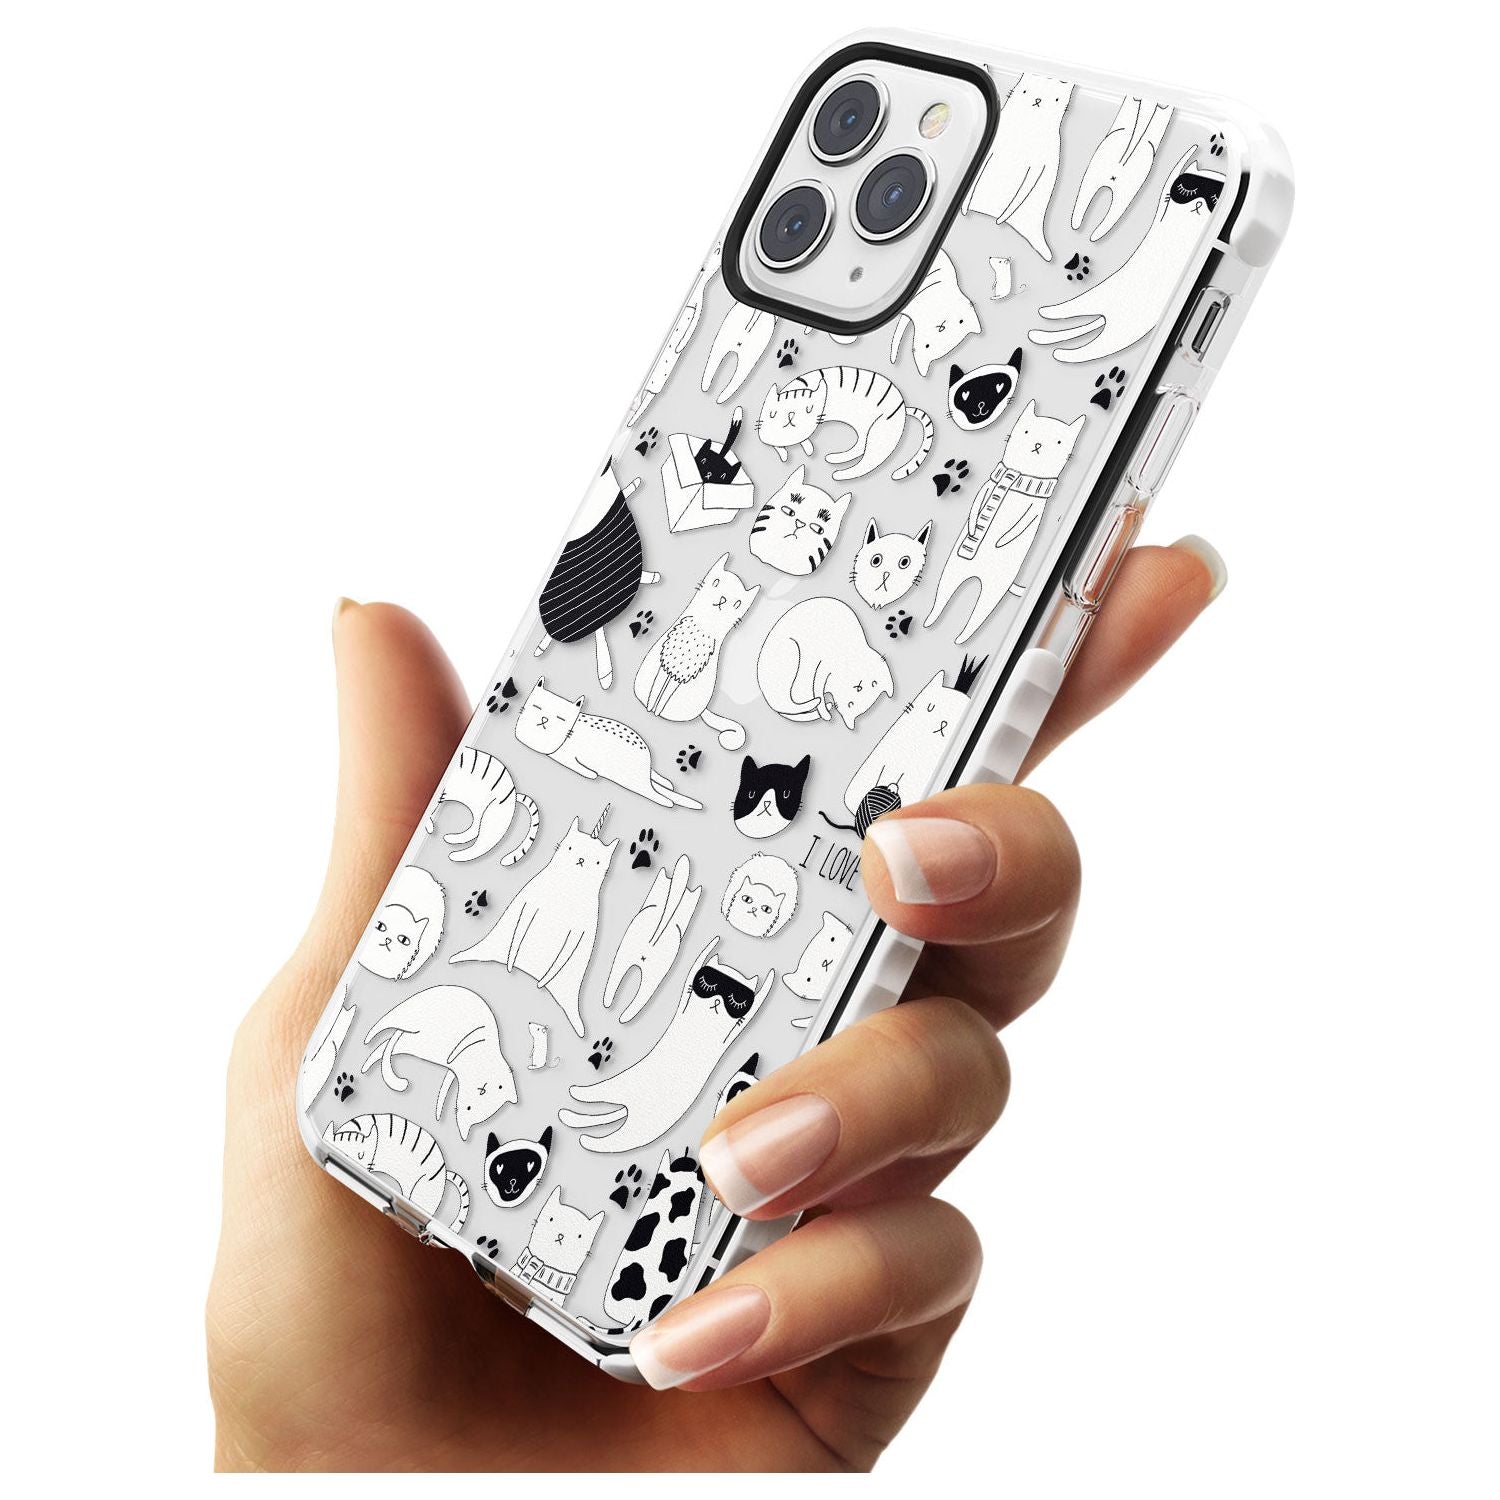 Cartoon Cat Collage - Black & White Slim TPU Phone Case for iPhone 11 Pro Max